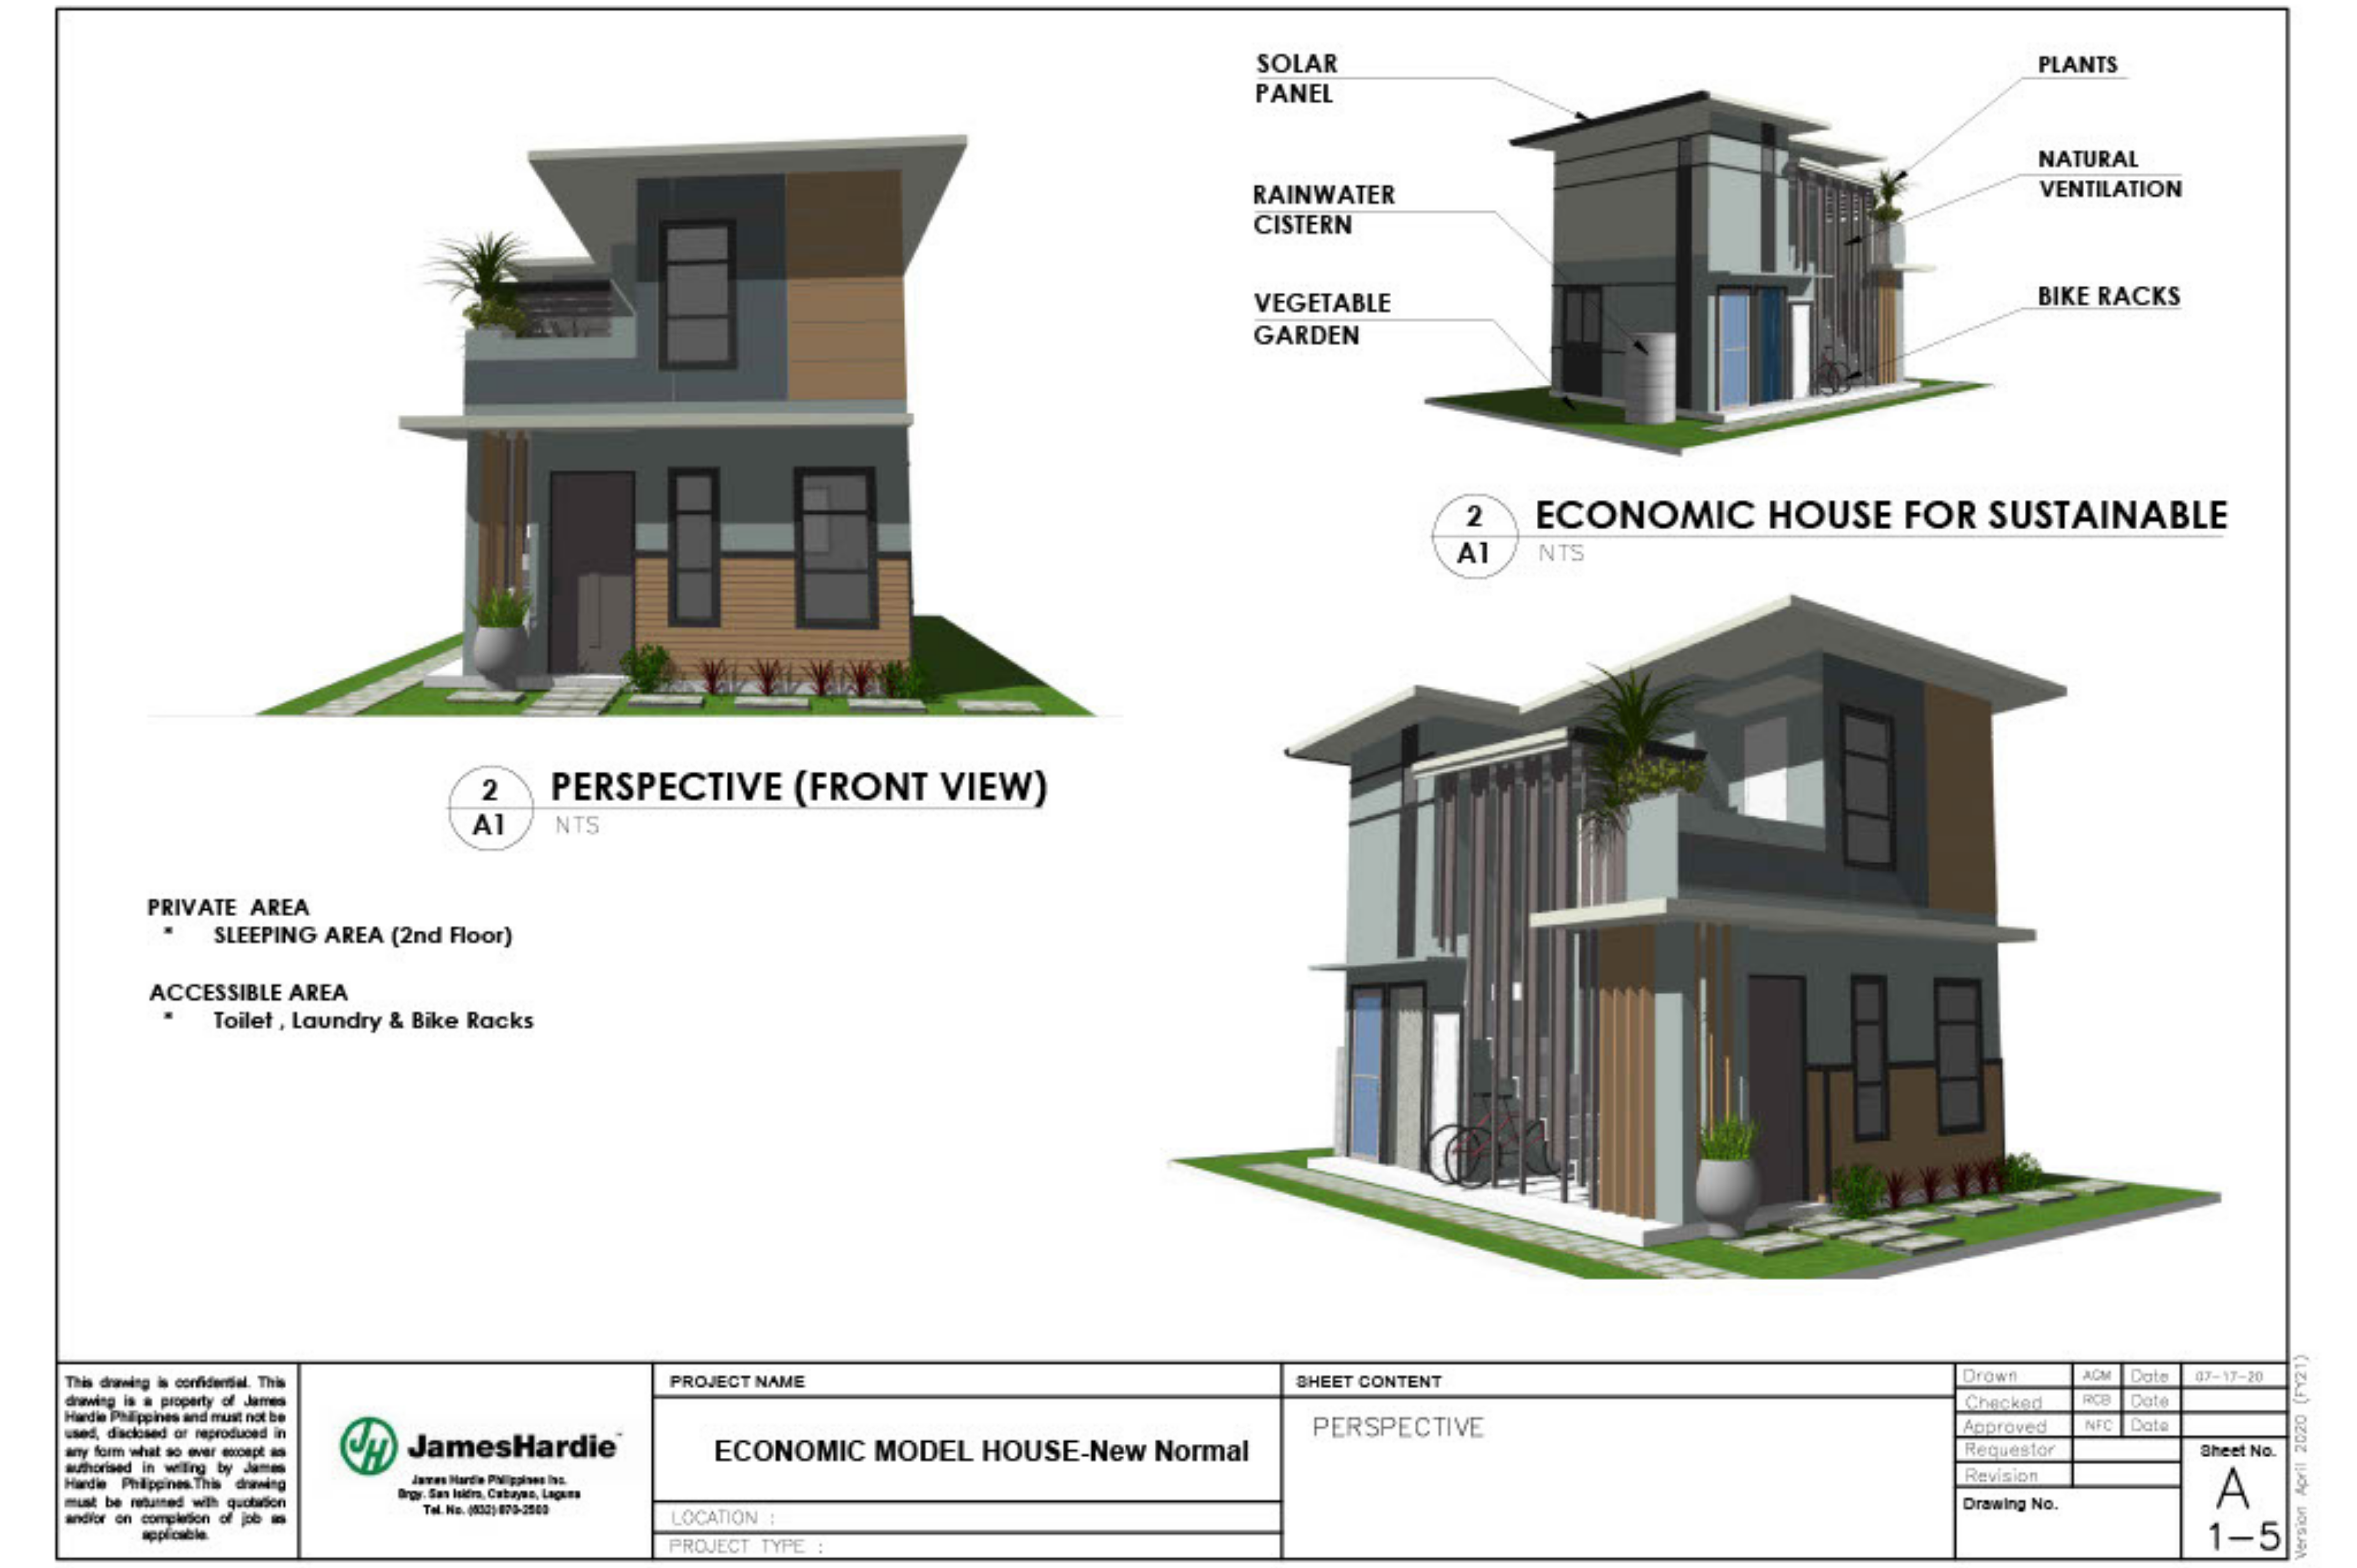 Economic Model House Image